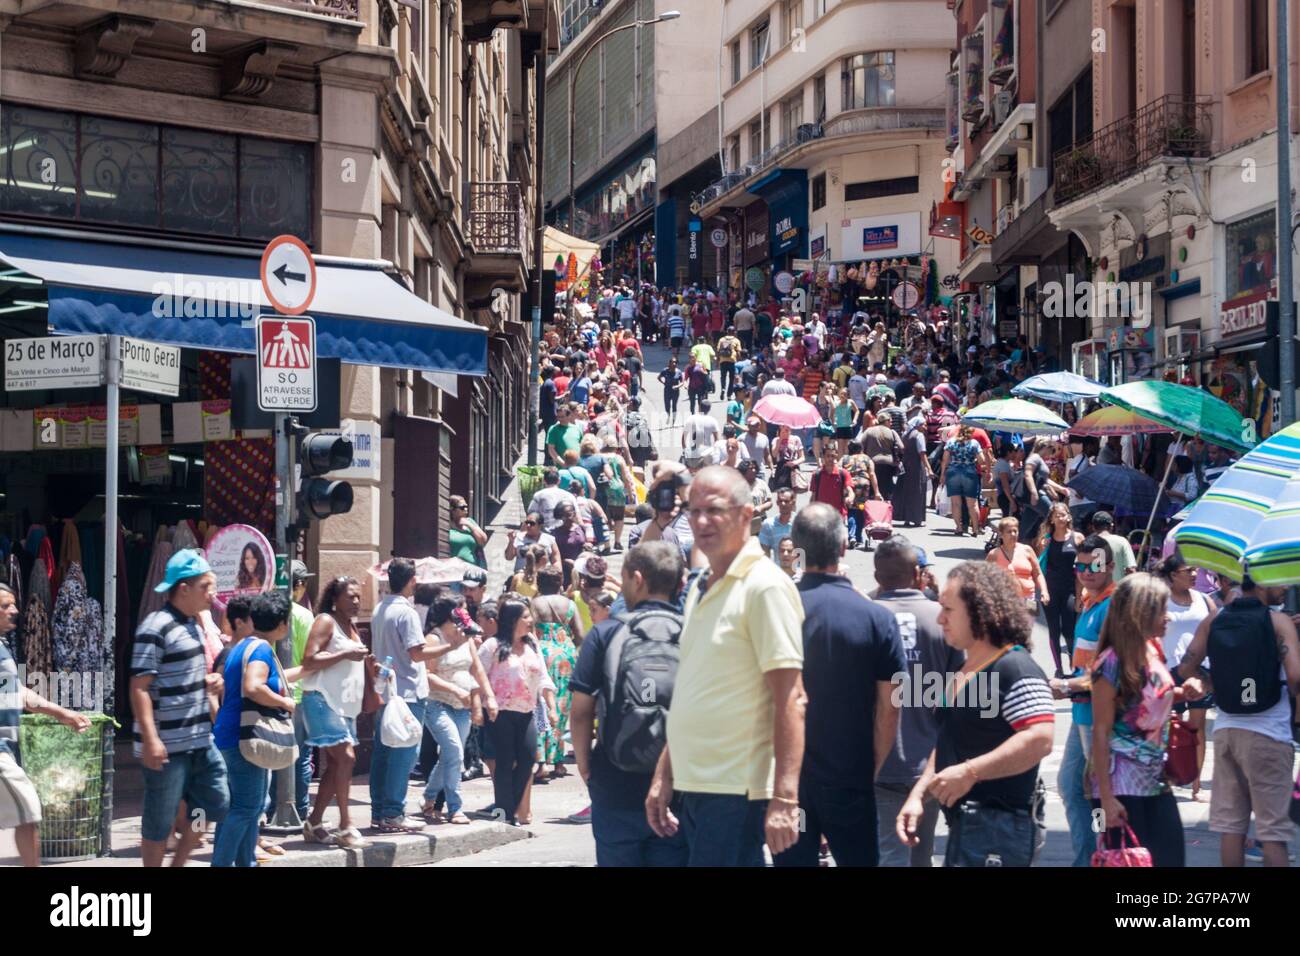 SAN PAOLO, BRASILE - 3 FEBBRAIO 2015: Strada affollata nel centro di San Paolo, Brasile Foto Stock